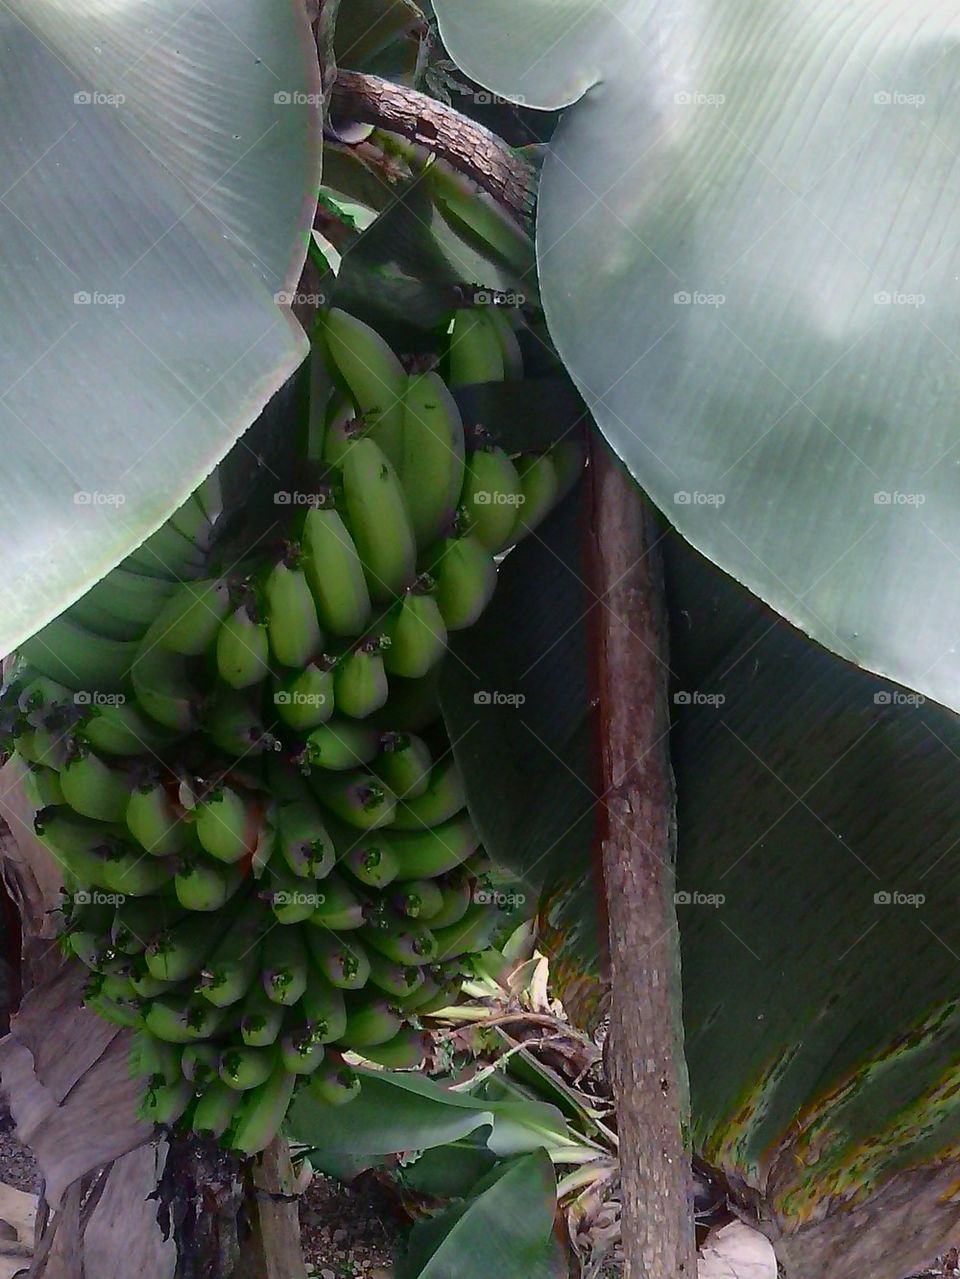 plantain plant